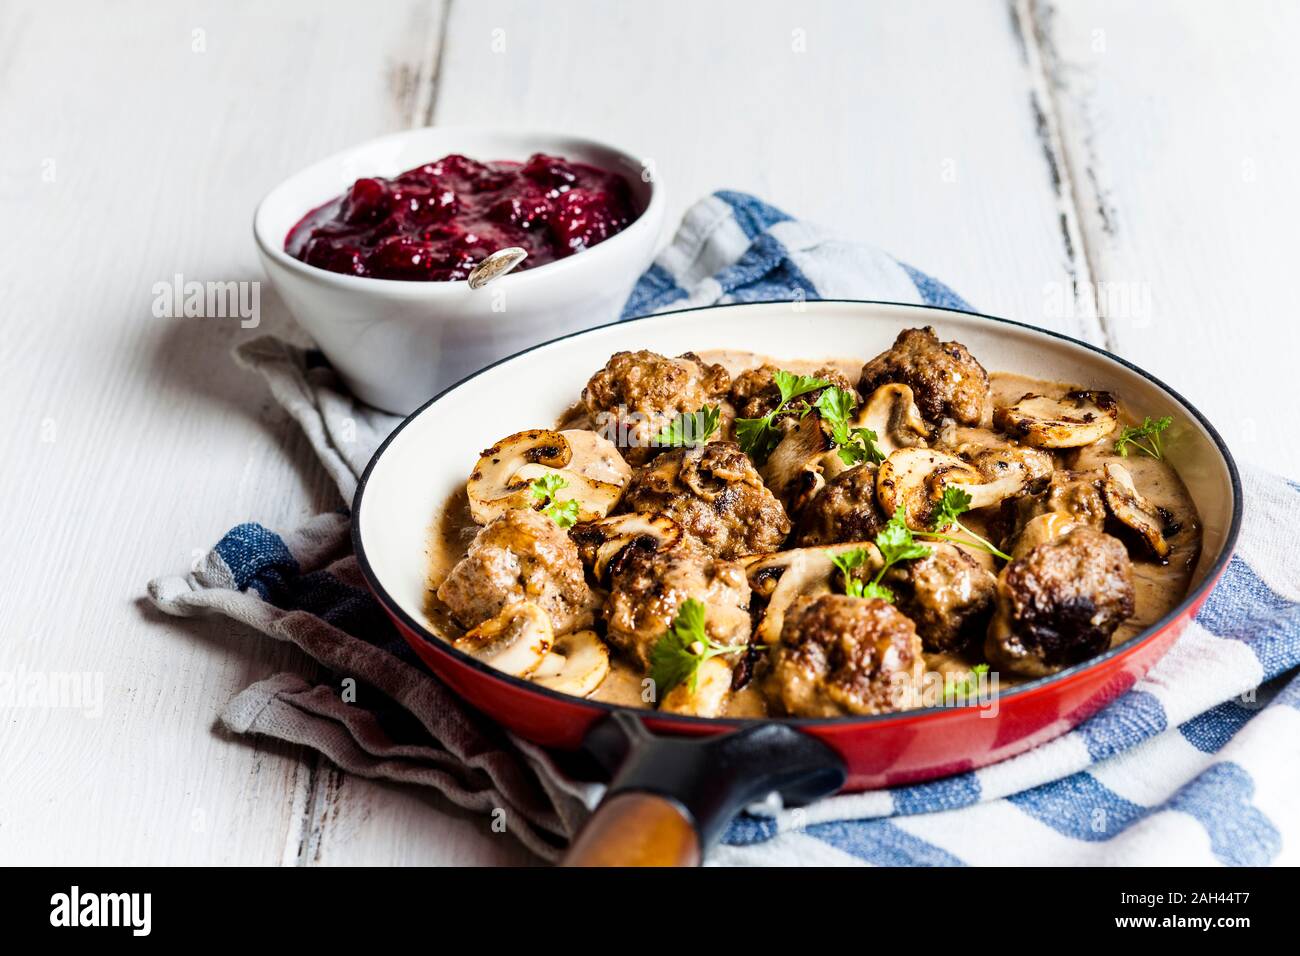 Frying pan with Swedish kottbullar meatballs in mushroom gravy and bowl of mashed cranberries Stock Photo